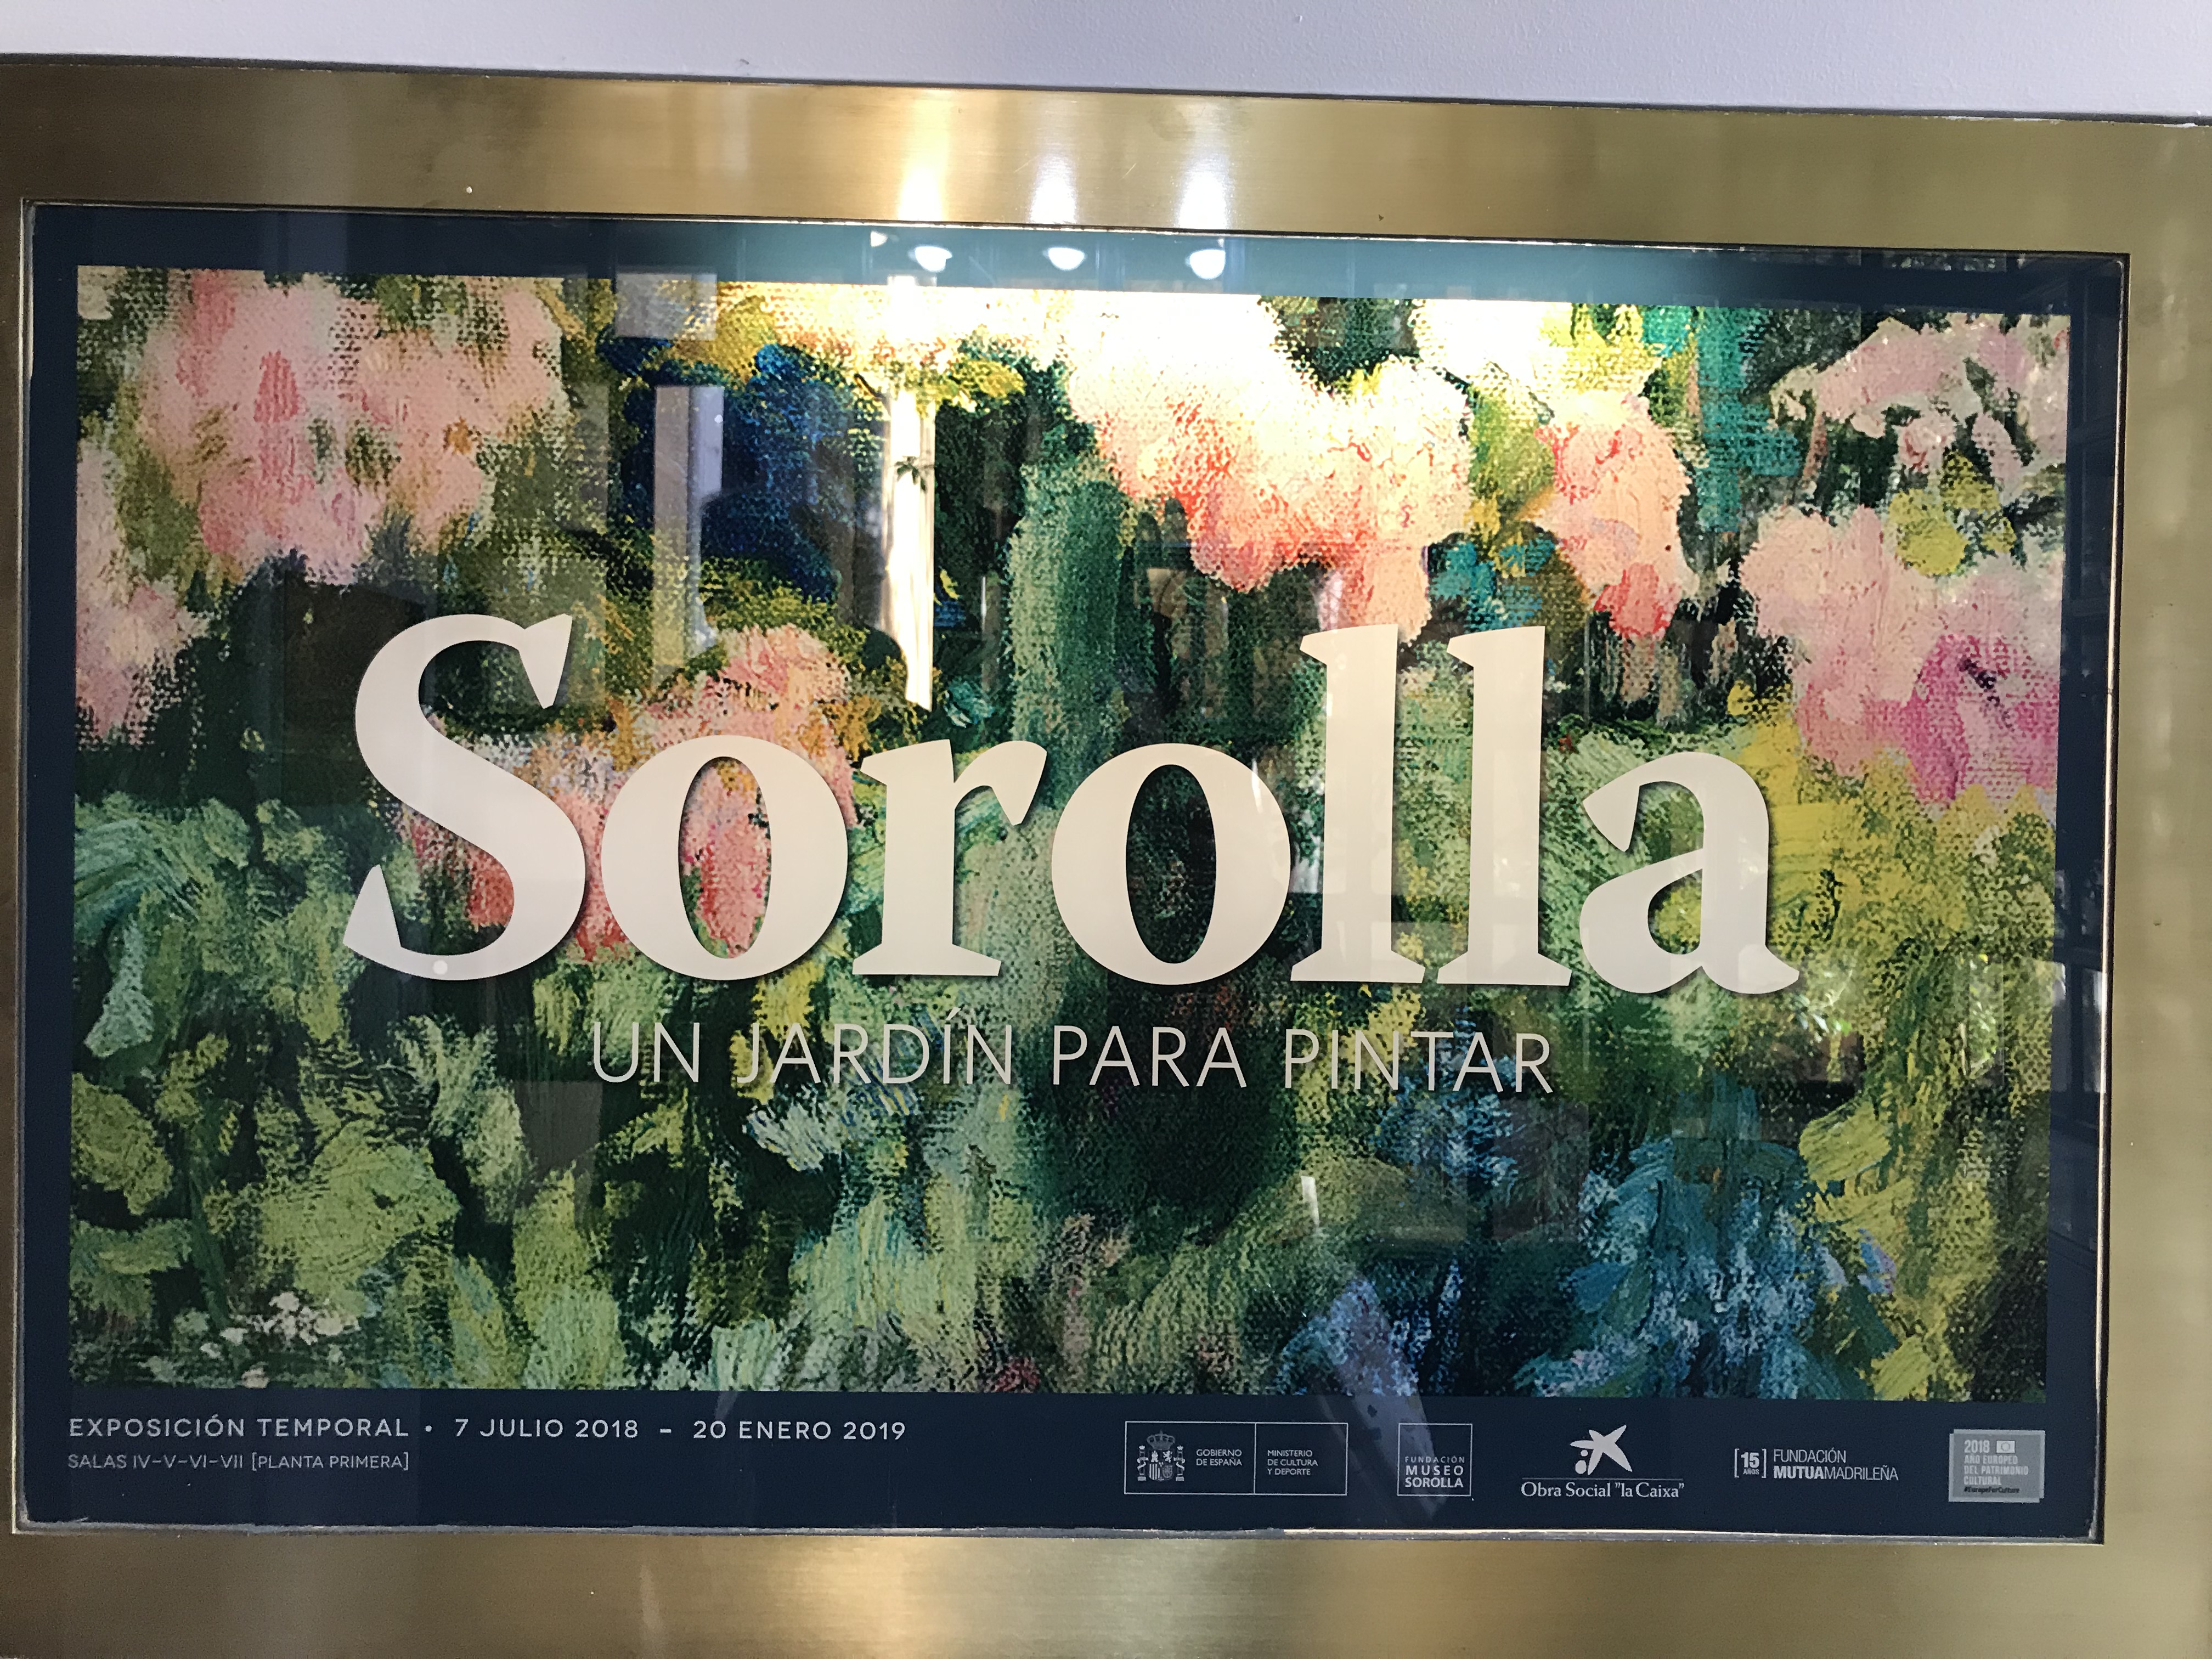 Visiting the Sorolla Museum